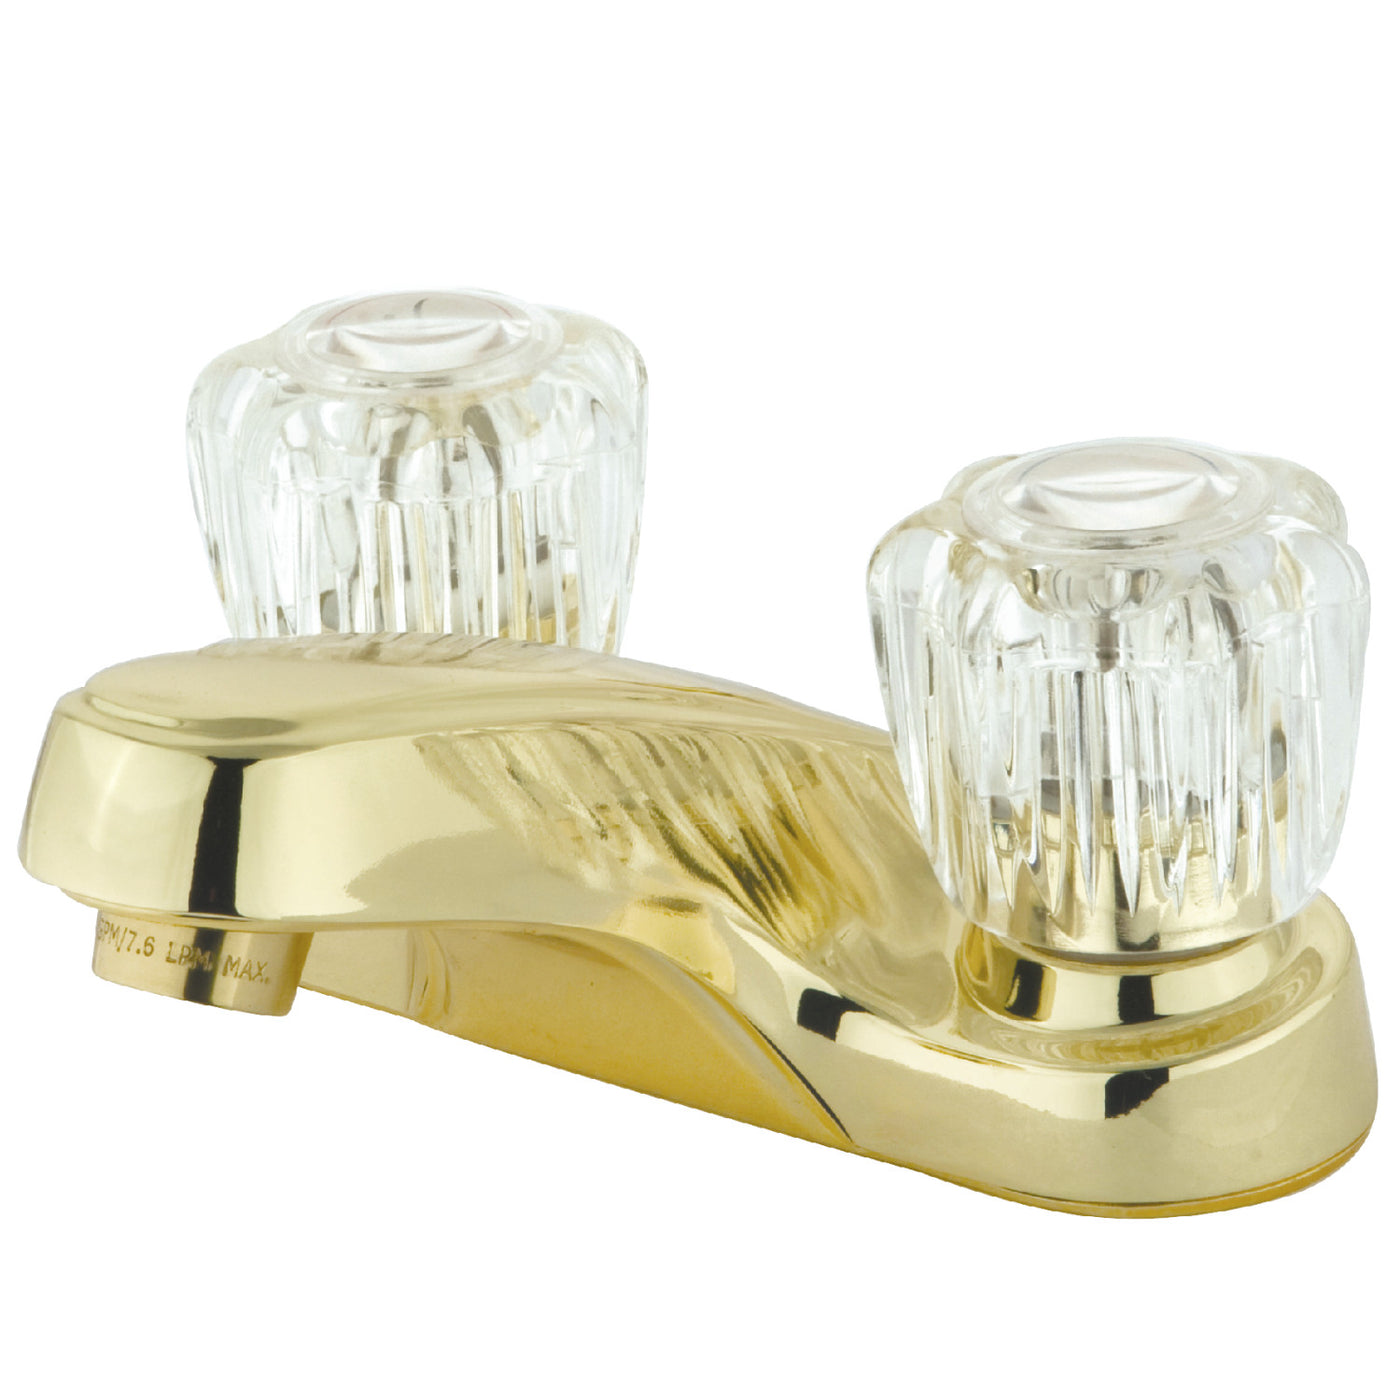 Elements of Design EB162LP 4-Inch Centerset Bathroom Faucet, Polished Brass